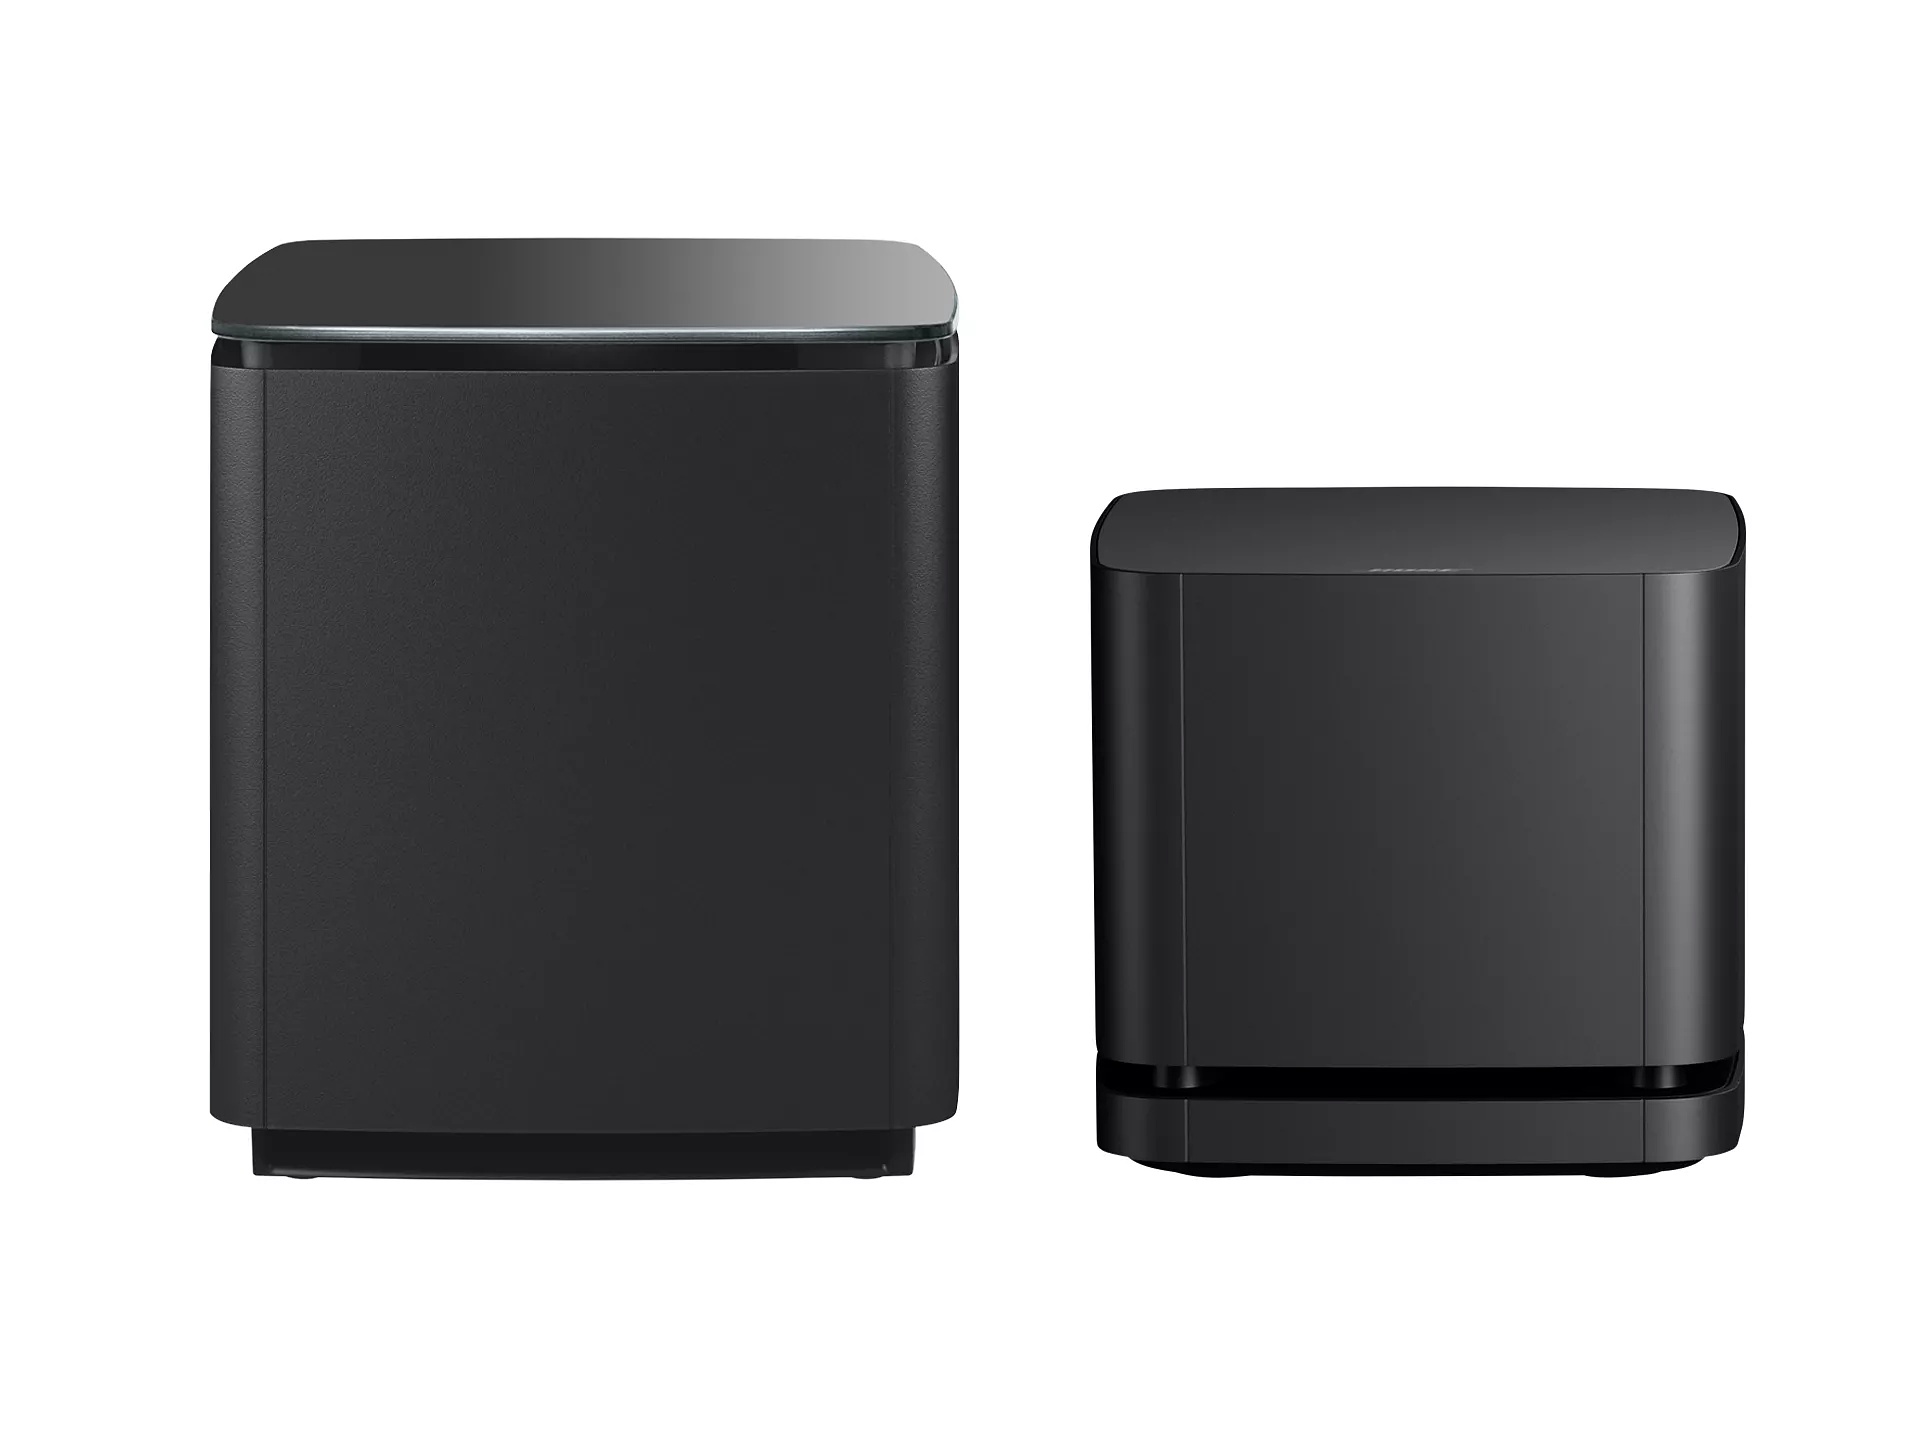 Bose Surround Speakers – Wireless Surround Sound Speakers Bose